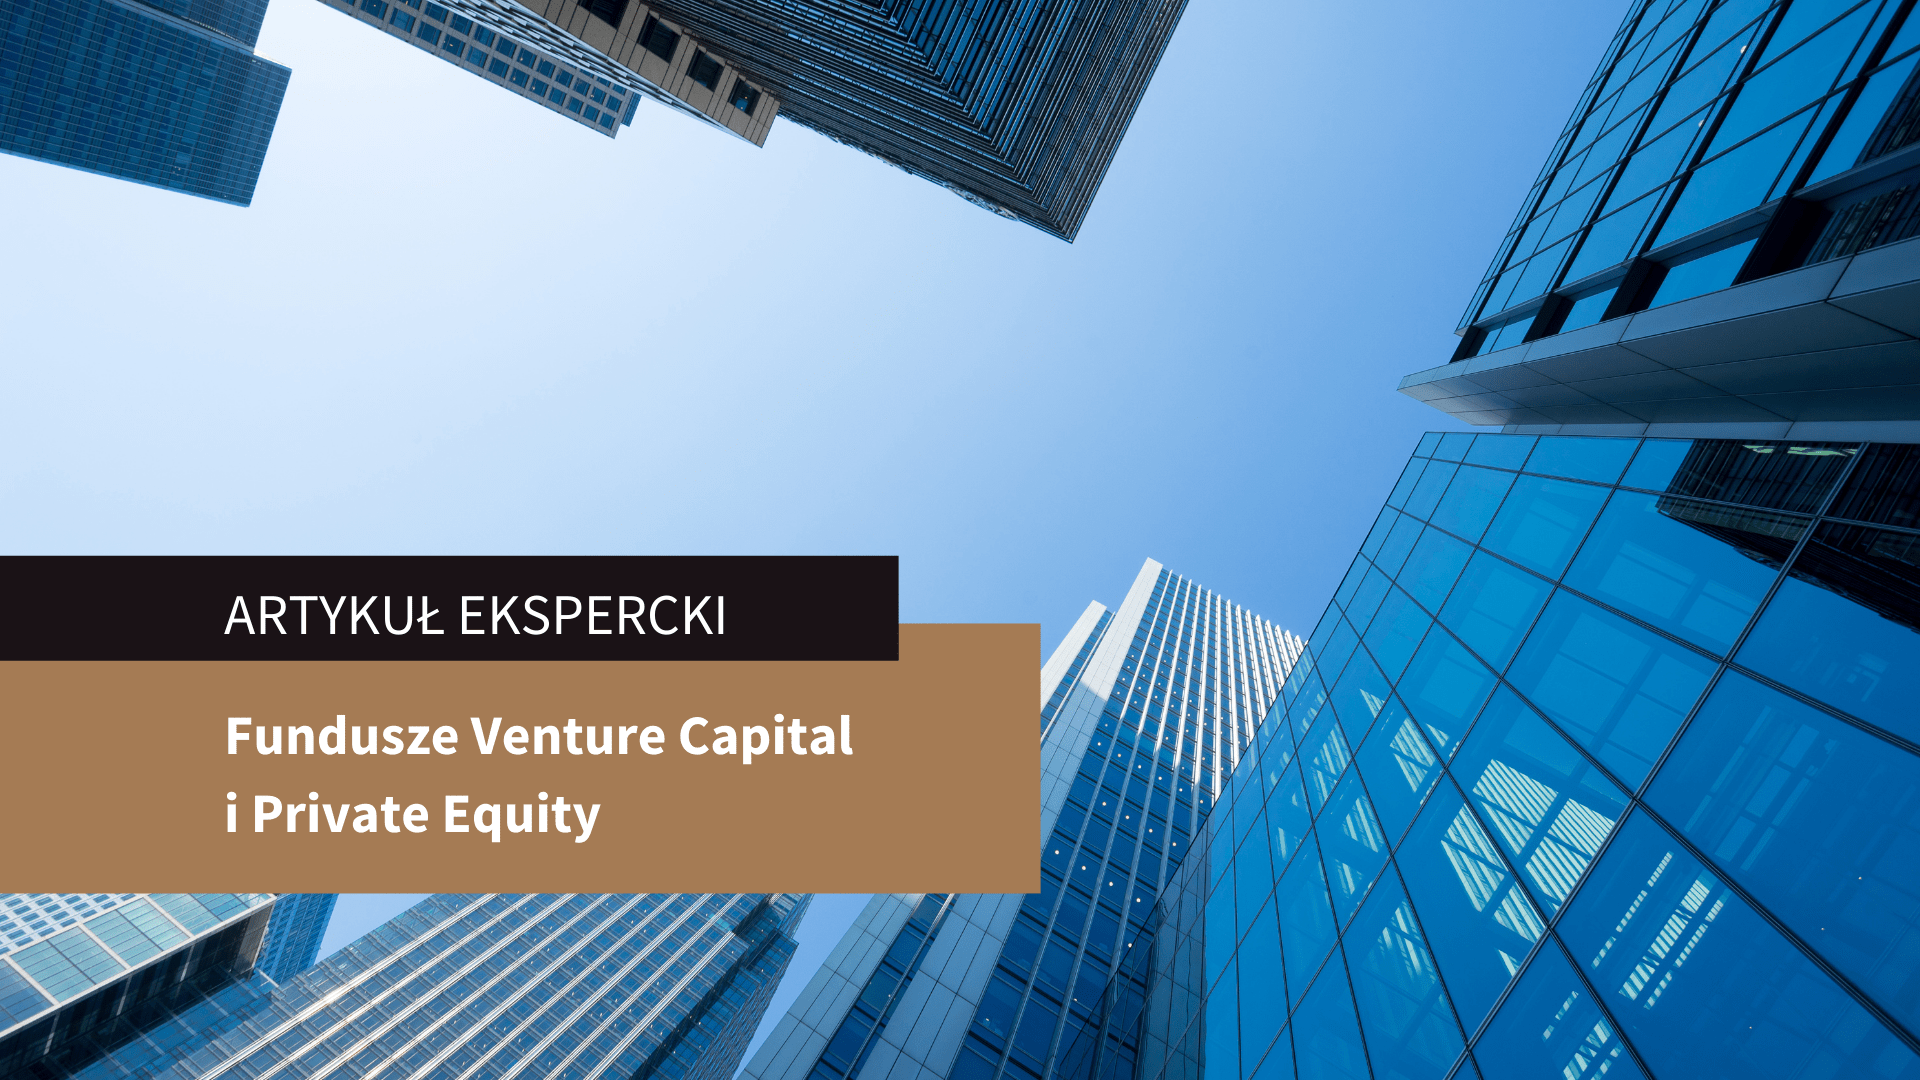 Fundusze Venture Capital i Private Equity – artykuł ekspercki